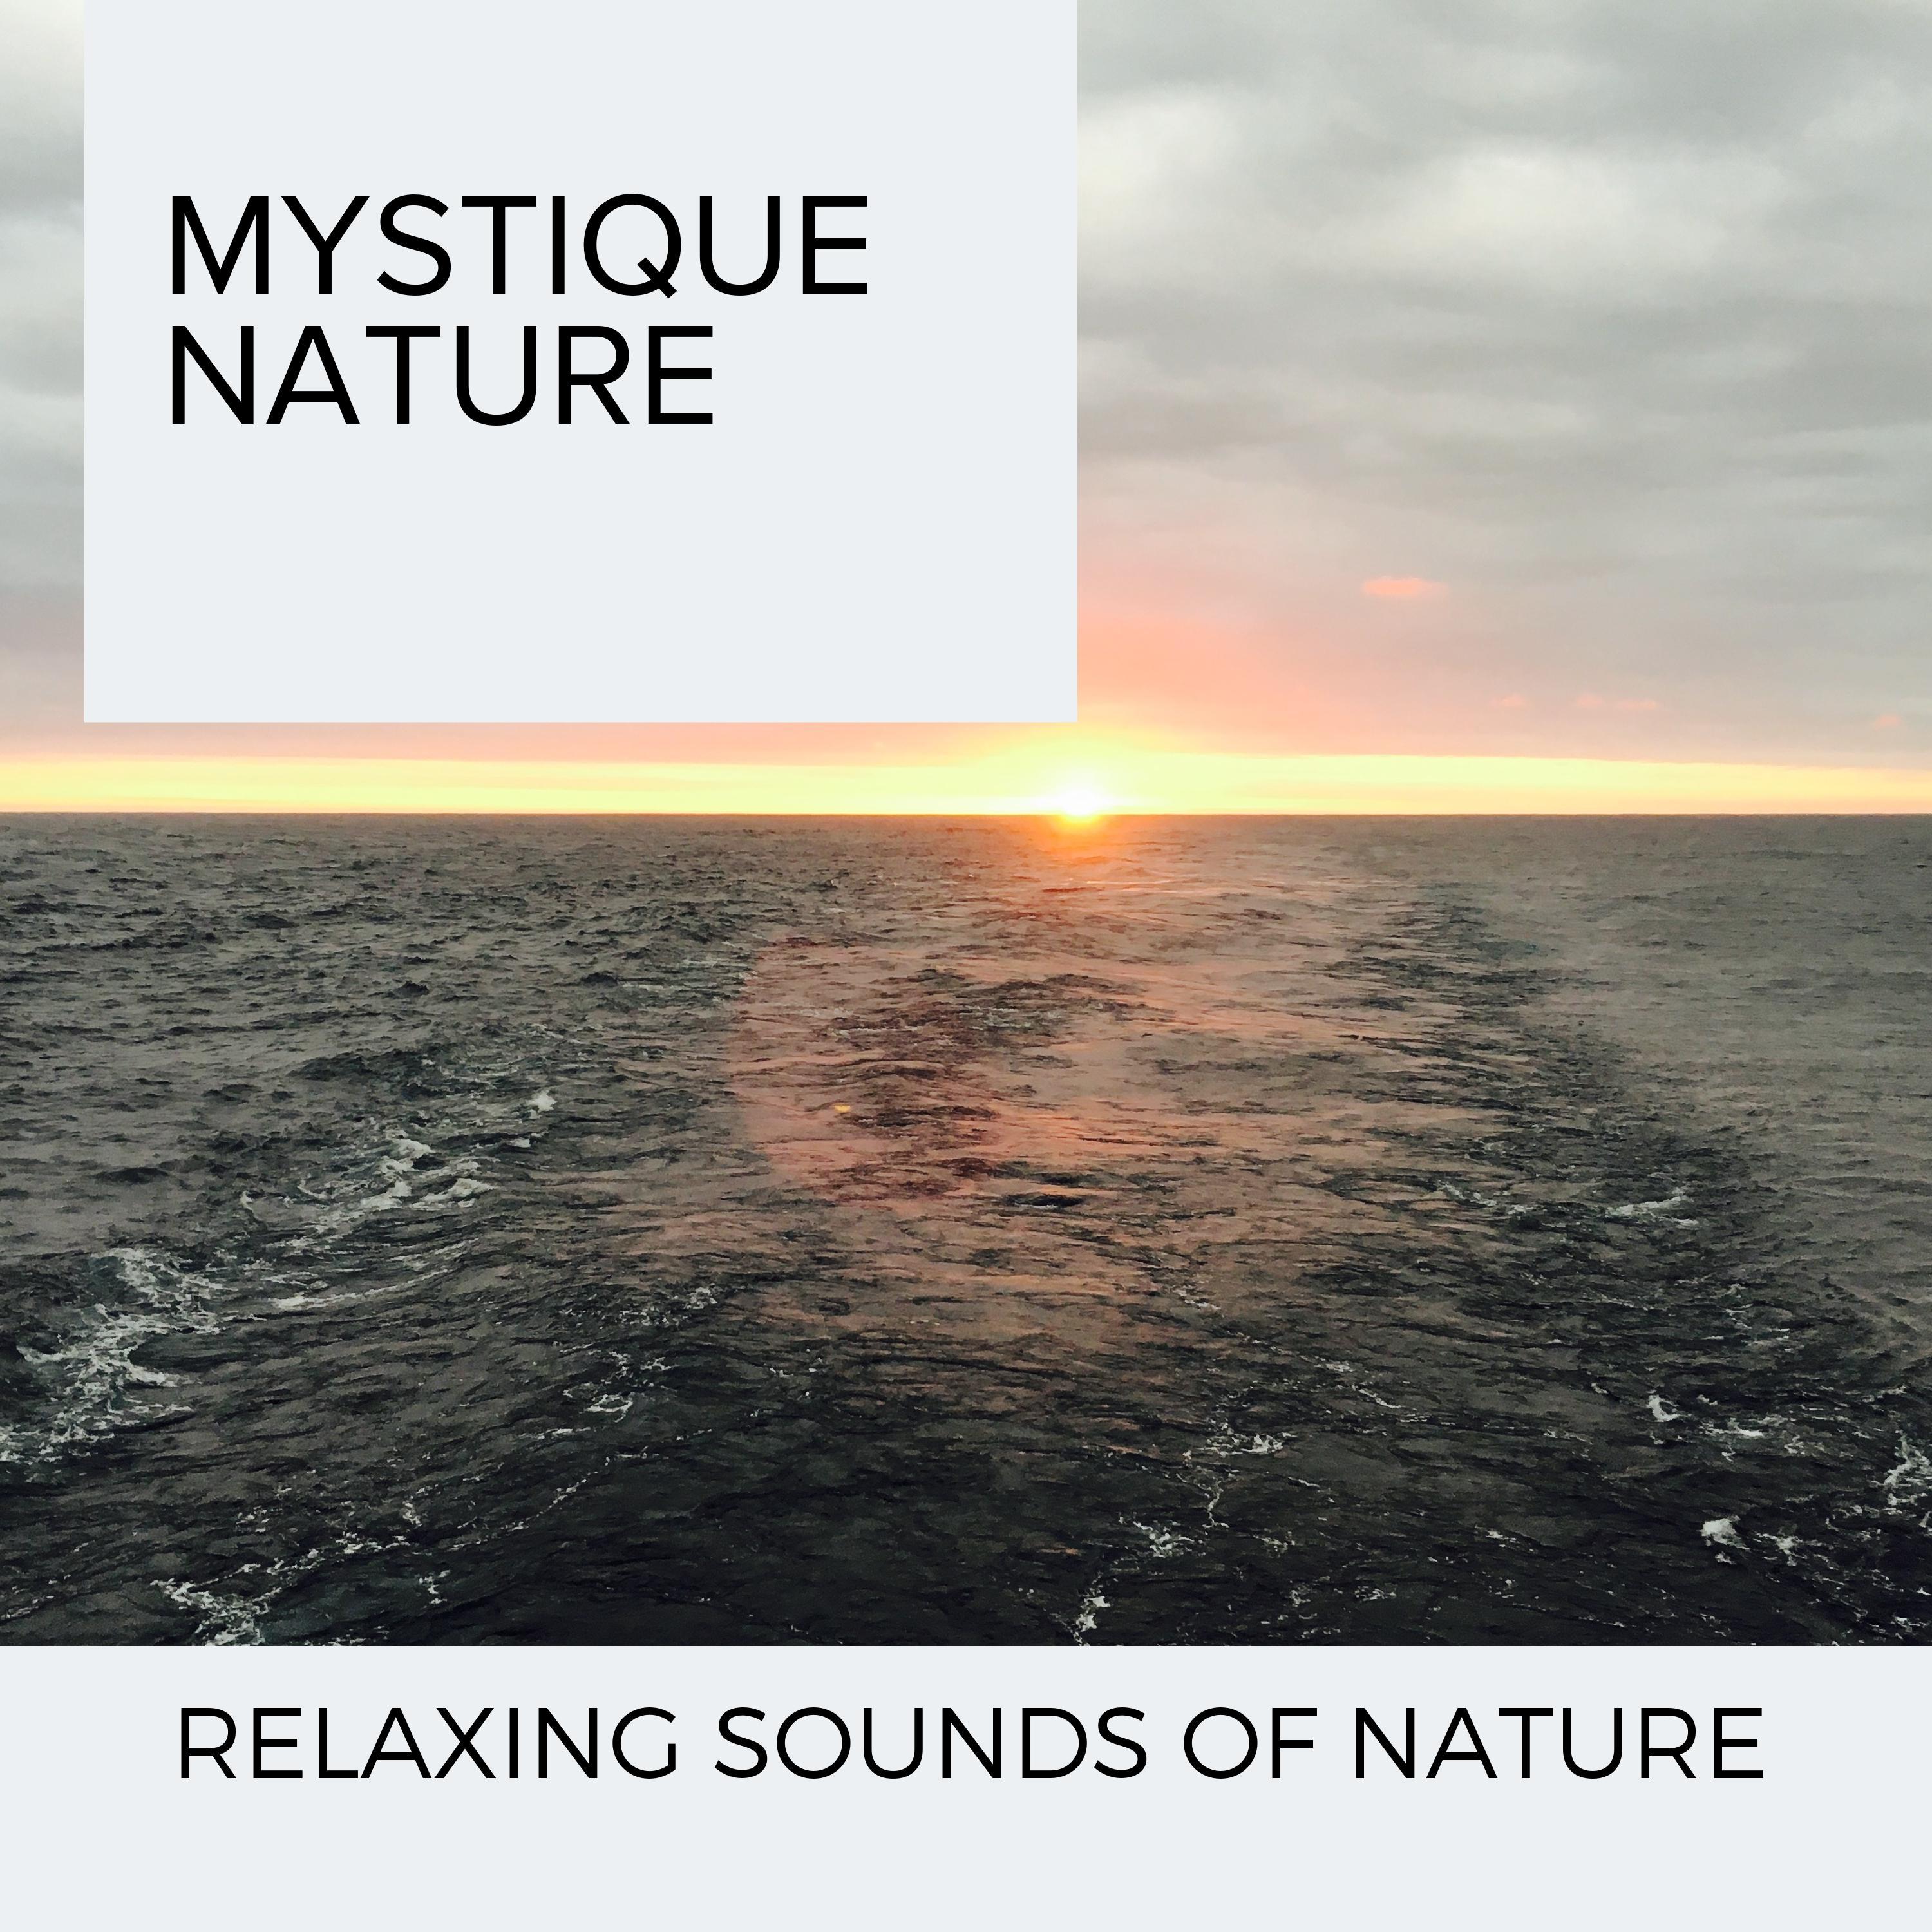 Dreamy Night Nature Music - Lift the Ocean Spirit